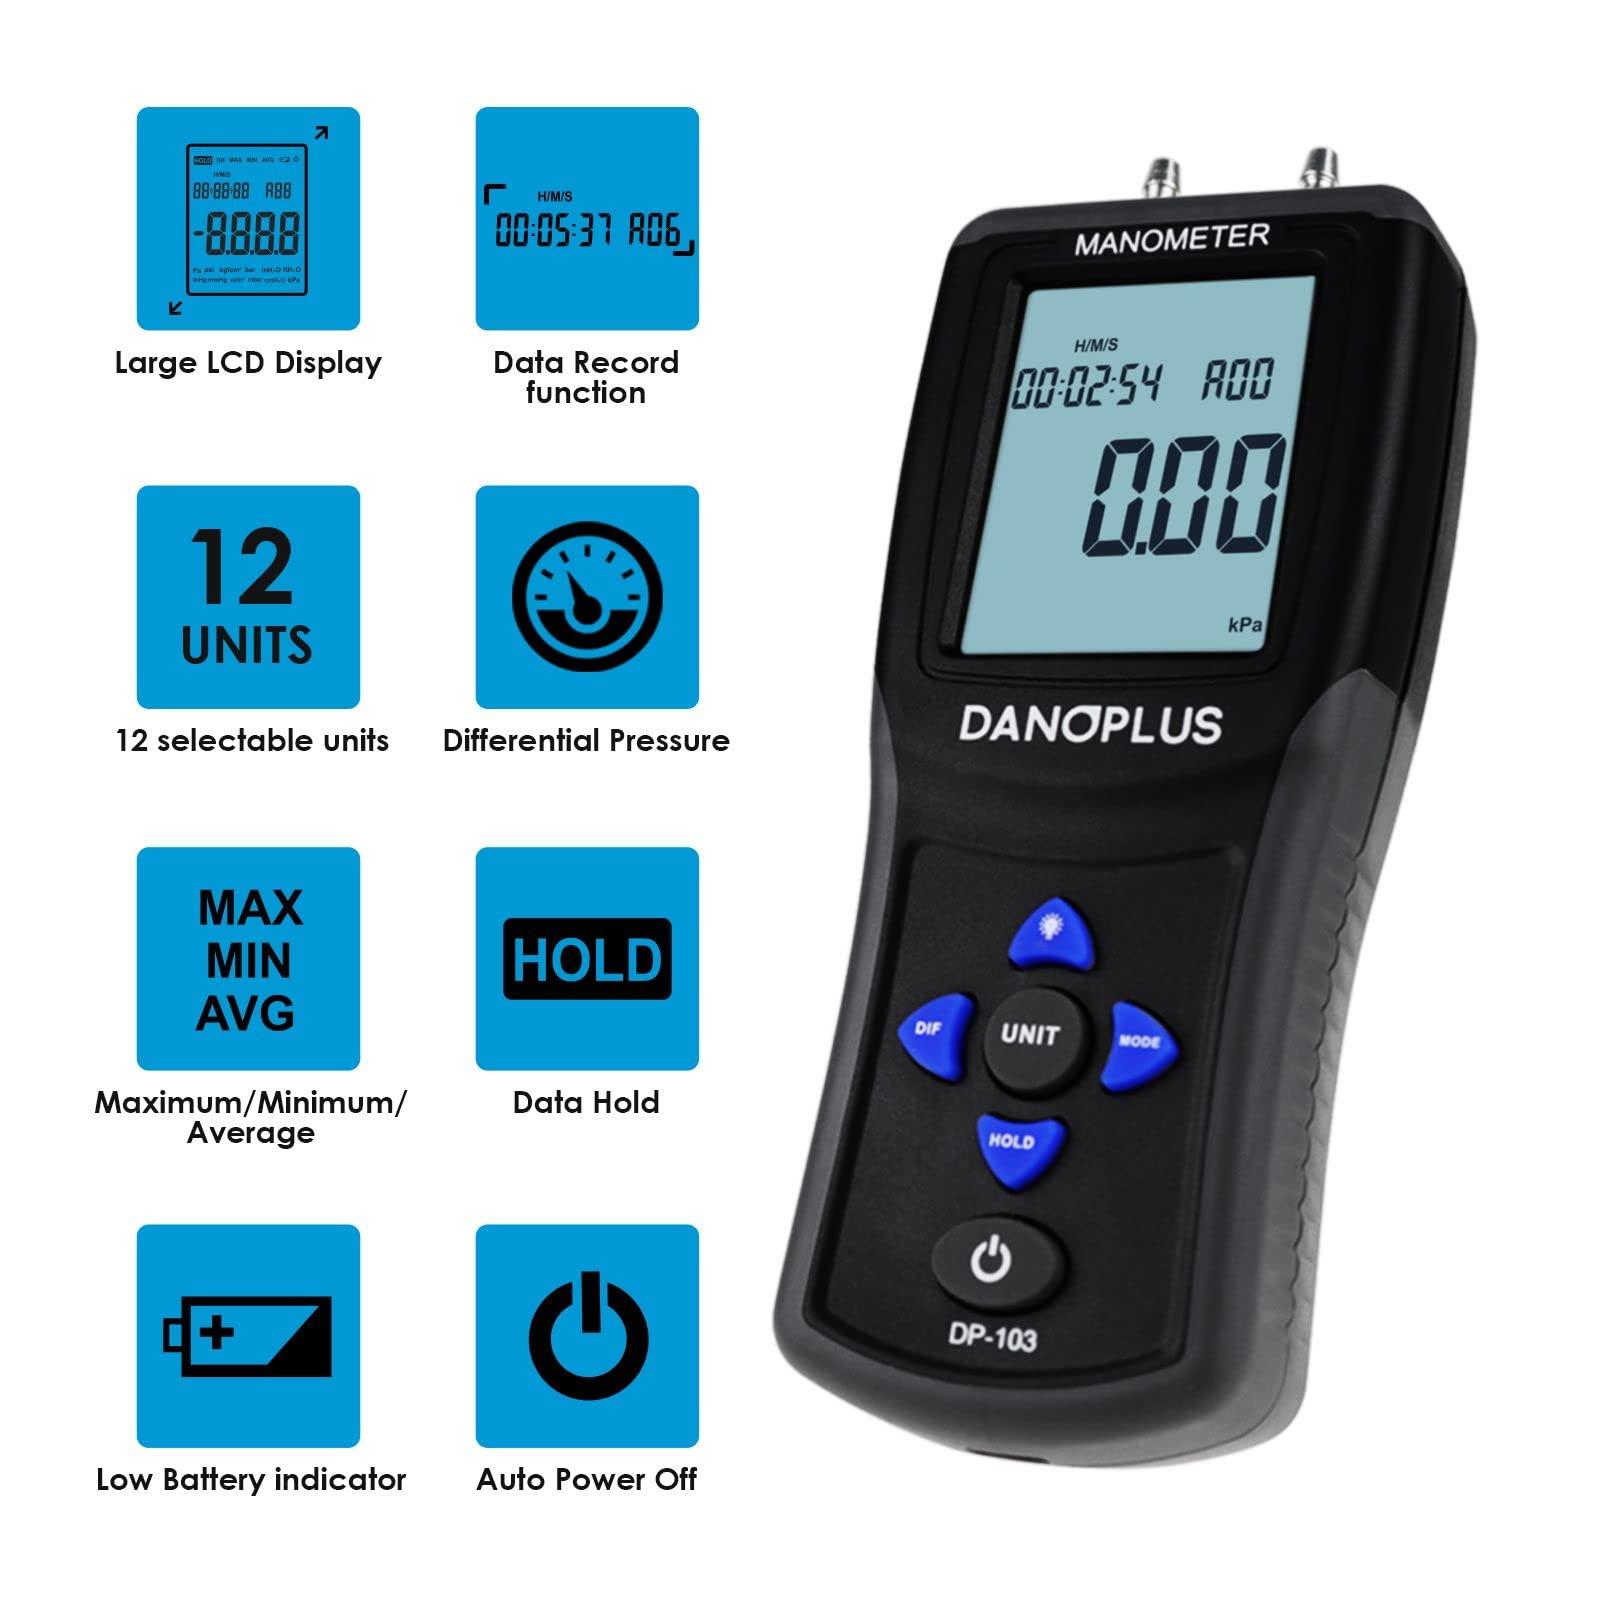 DANOPLUS DP-103 Manometer Digital Gas Pressure Tester Differential Pressure Gauge HVAC Air Pressure Meter with Backlight Data Record Function,Black 1